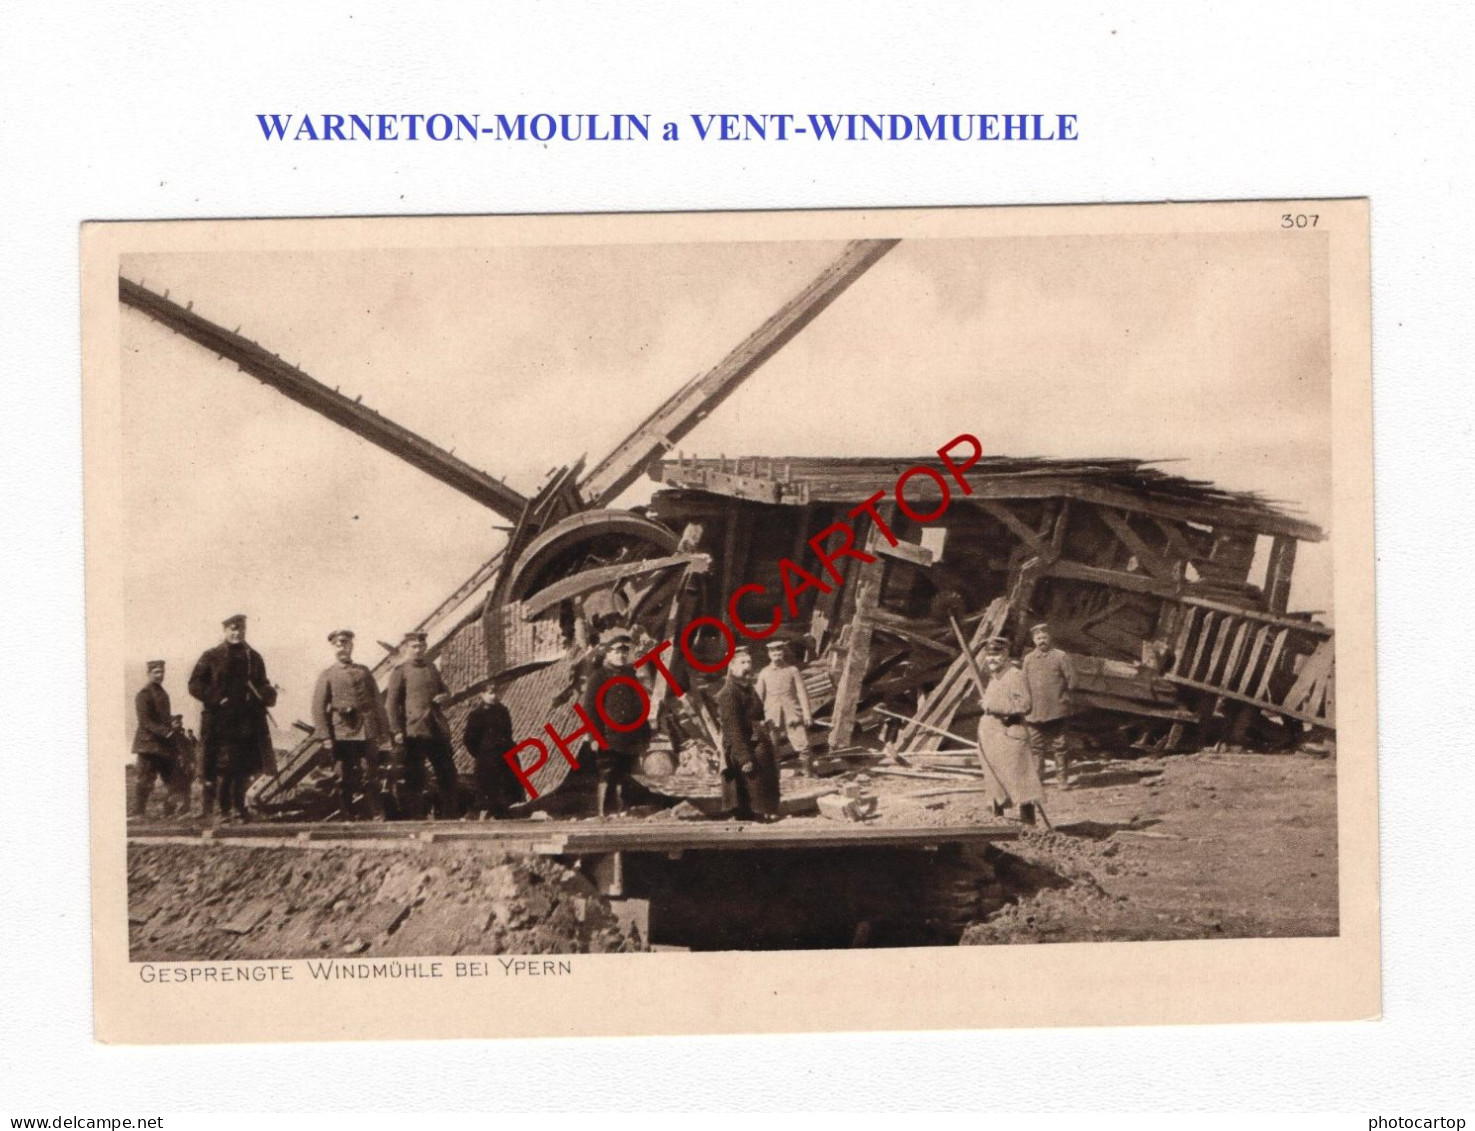 WARNETON-MOULIN A VENT-WINDMUEHLE-CARTE Imprimee Allemande-Guerre-14-18-1 WK-BELGIQUE-BELGIEN-Flandern- - Comines-Warneton - Komen-Waasten